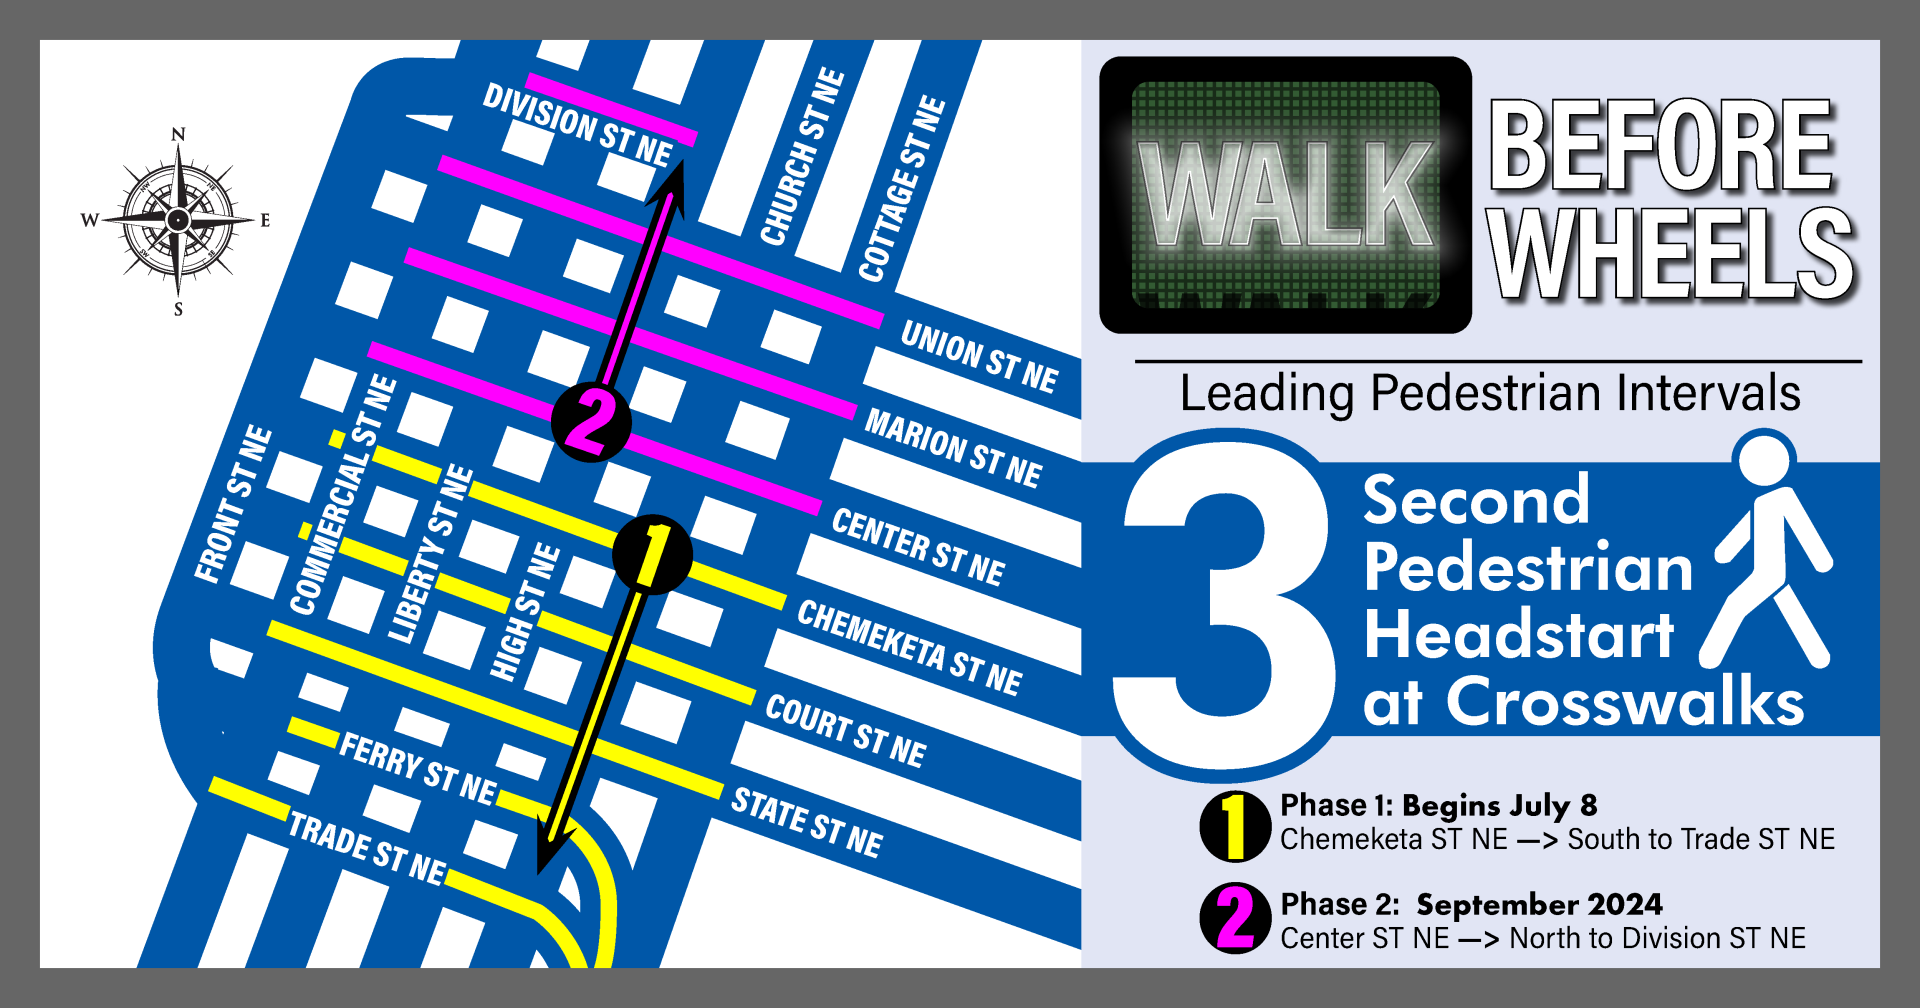 Walk Before Wheels: Starting July 8th, Pedestrians Get a 3-Second Head Start in Downtown Salem